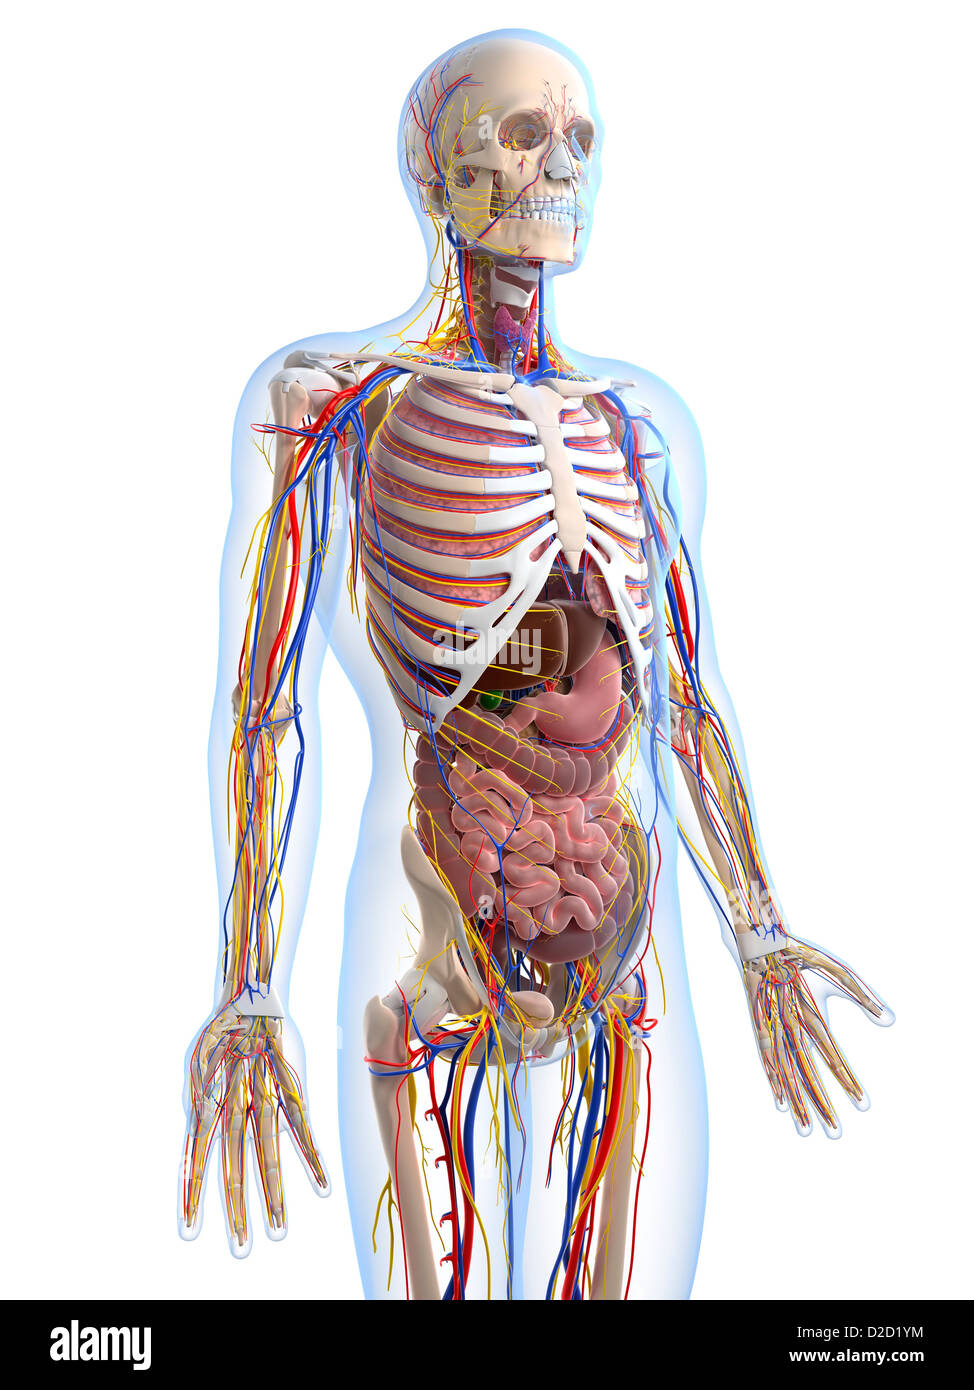 Human anatomy computer artwork Stock Photo - Alamy